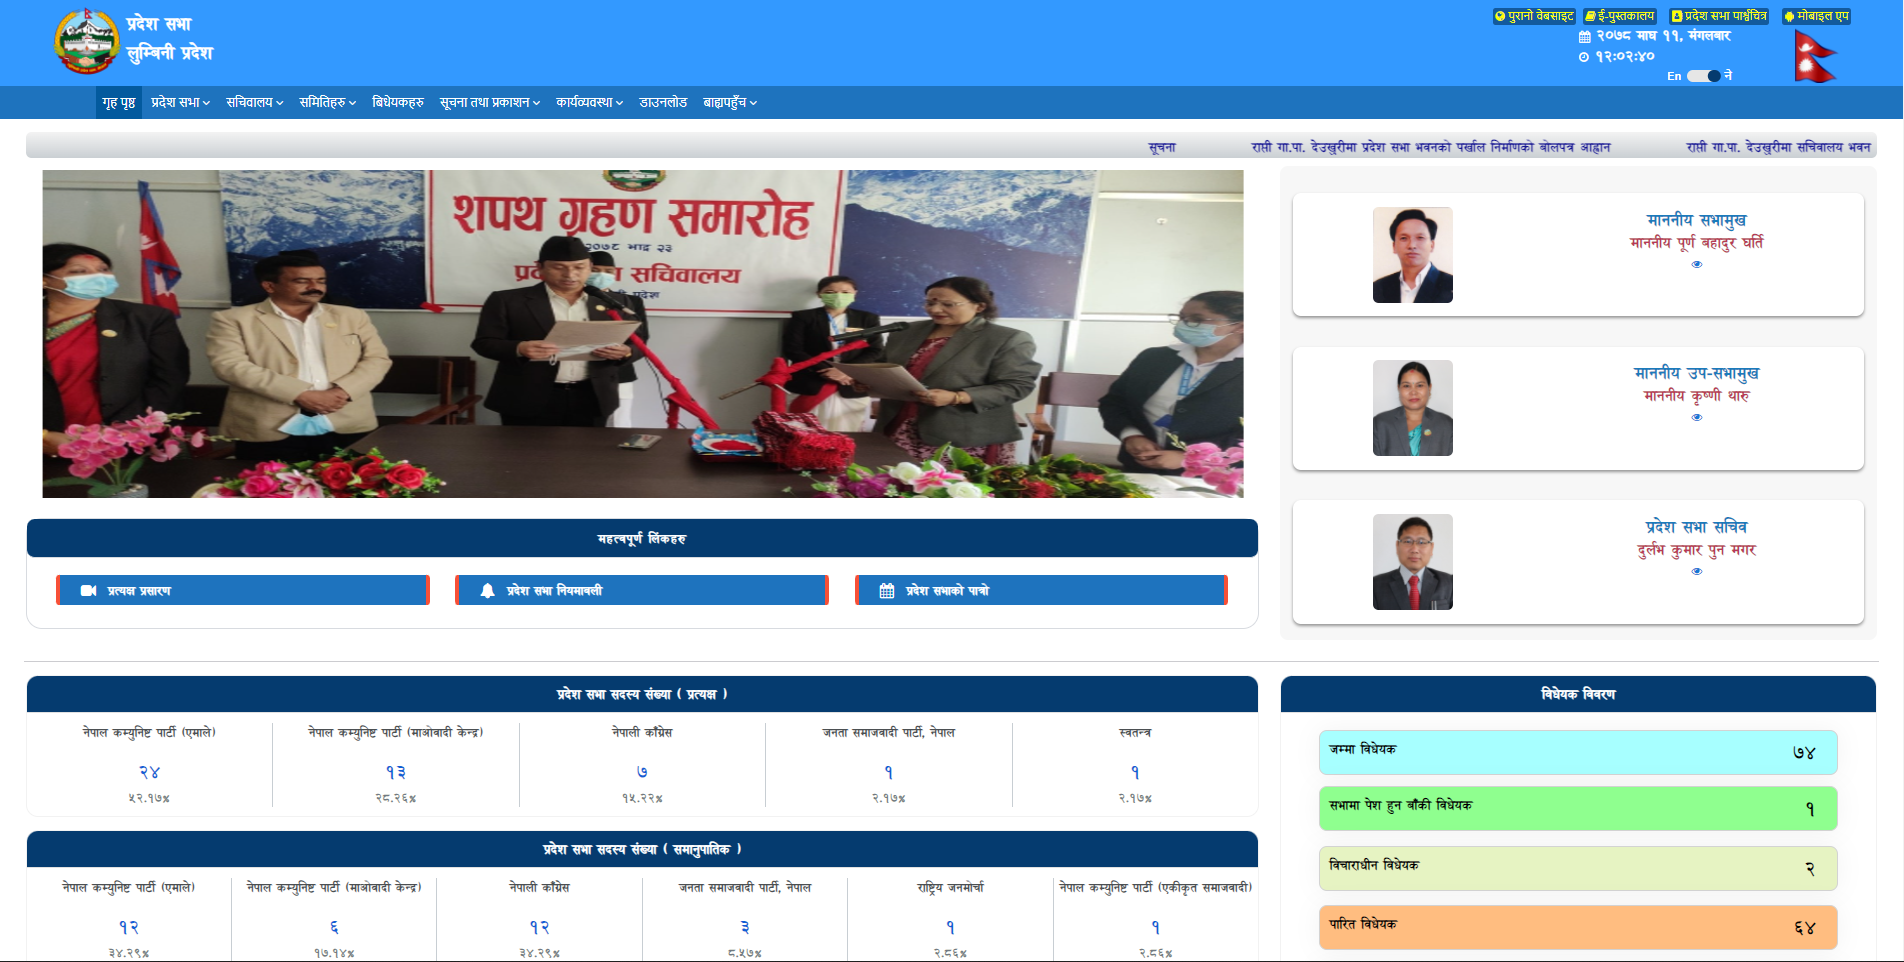 PradeshSabha Website